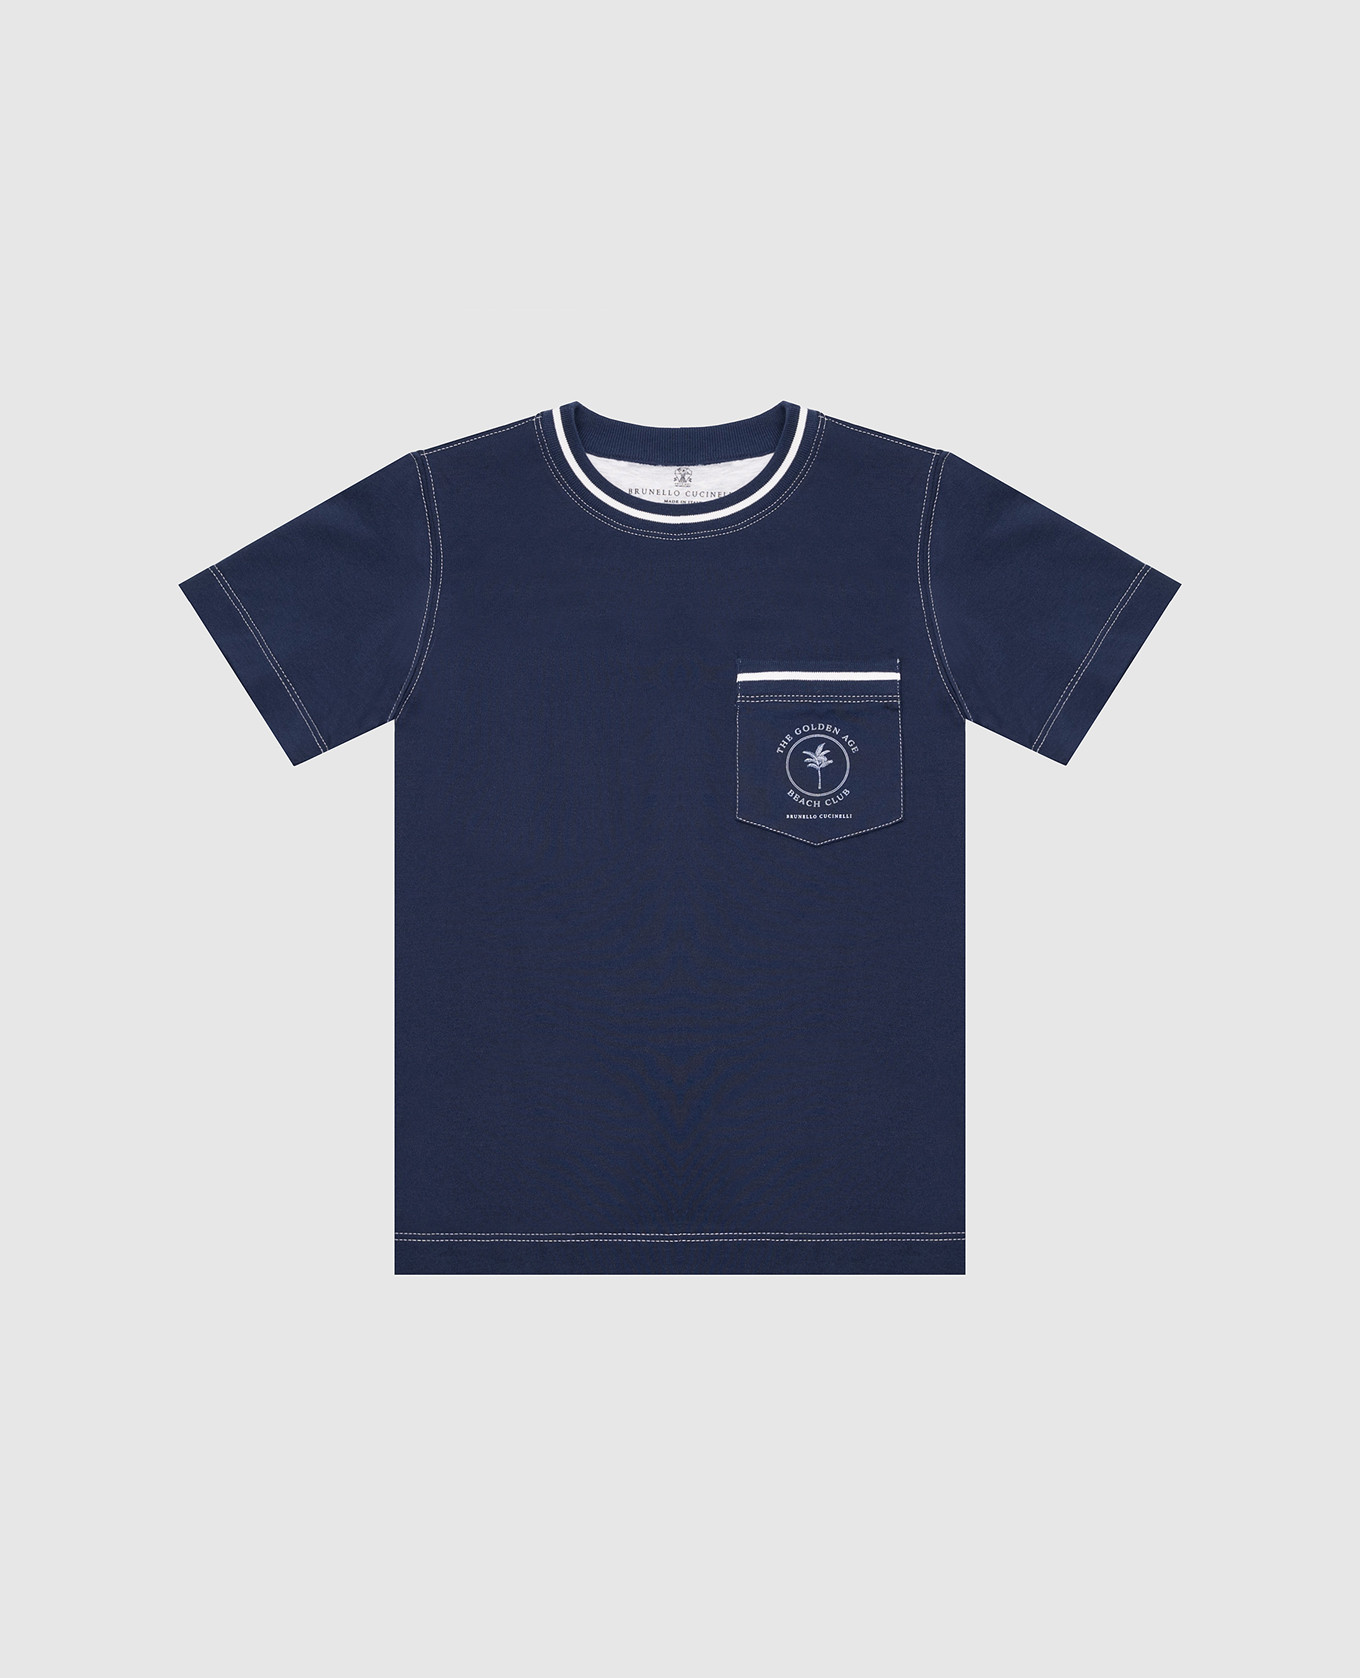 Children's blue T-shirt with a print